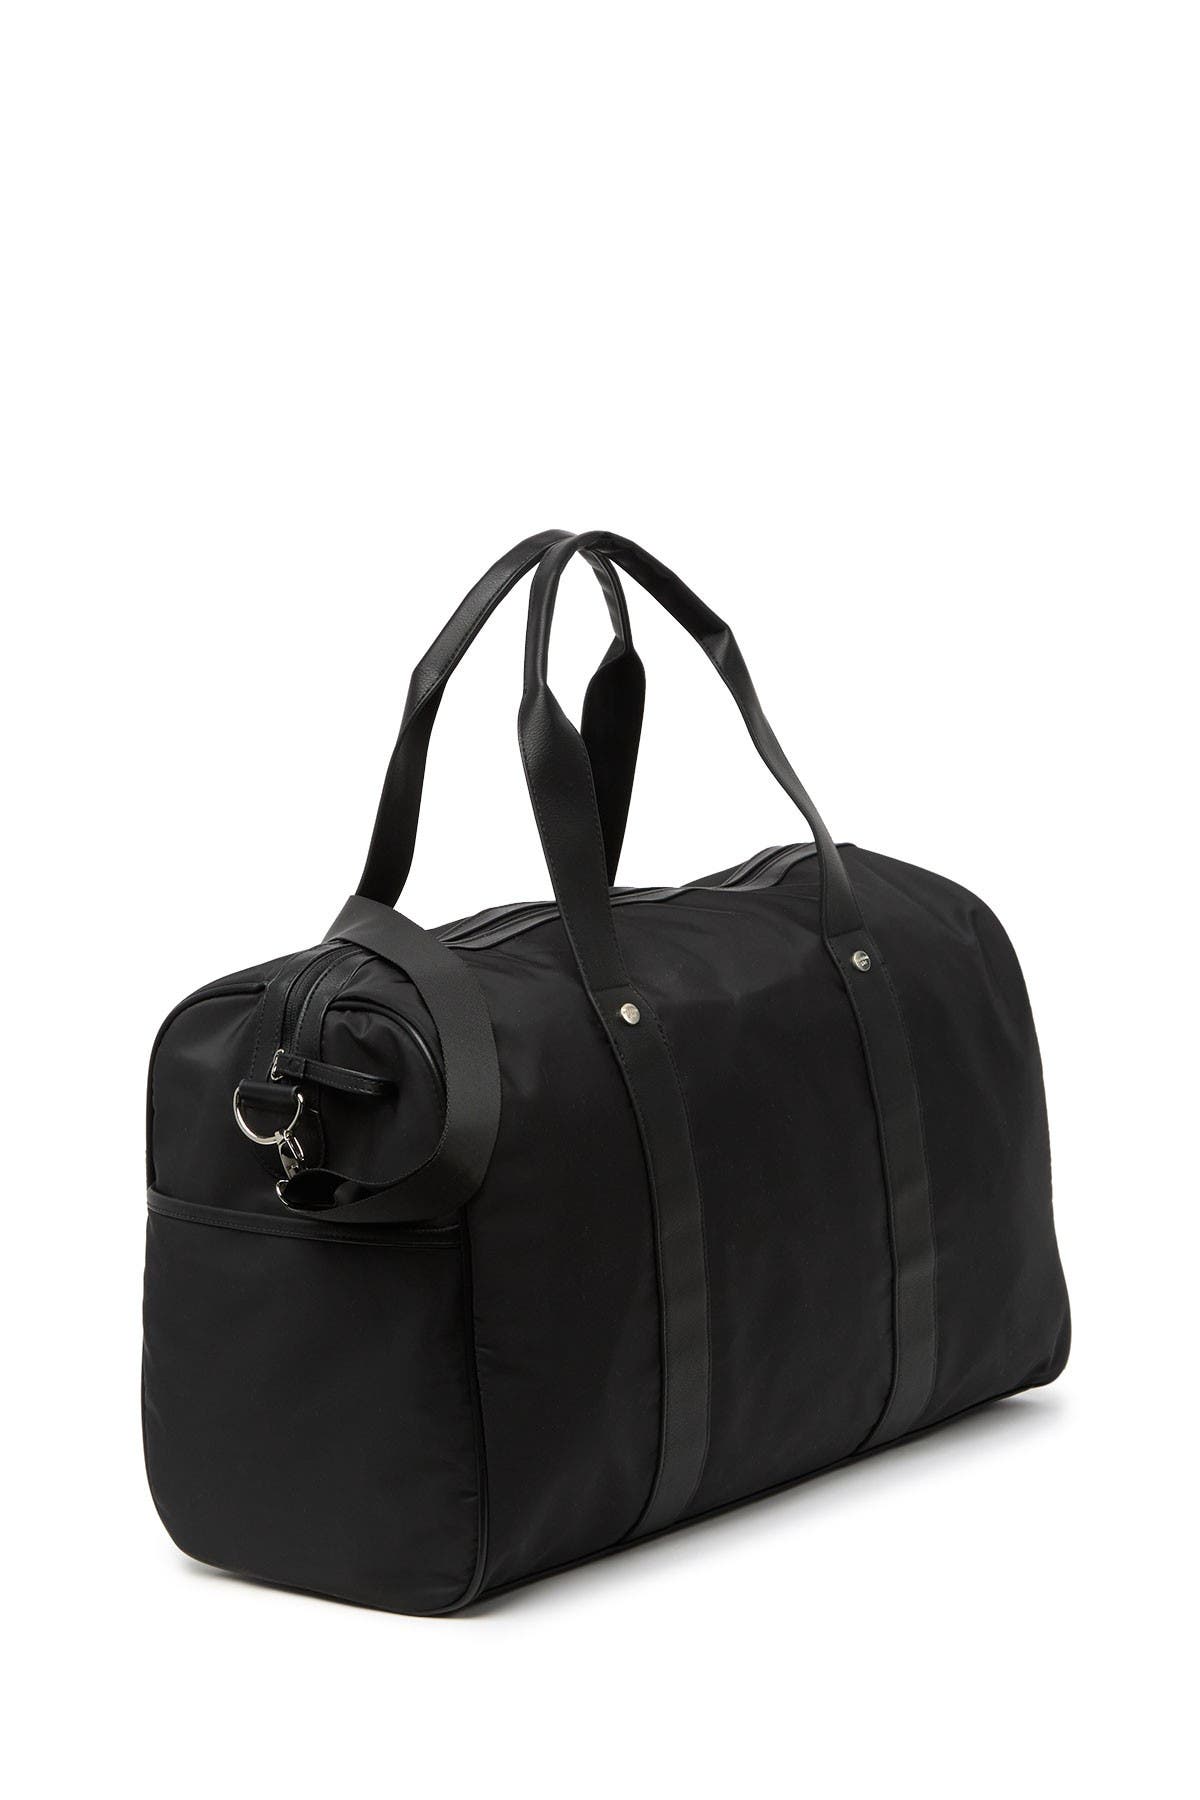 Madden Girl | Carry-On Weekend Duffel Bag | Nordstrom Rack